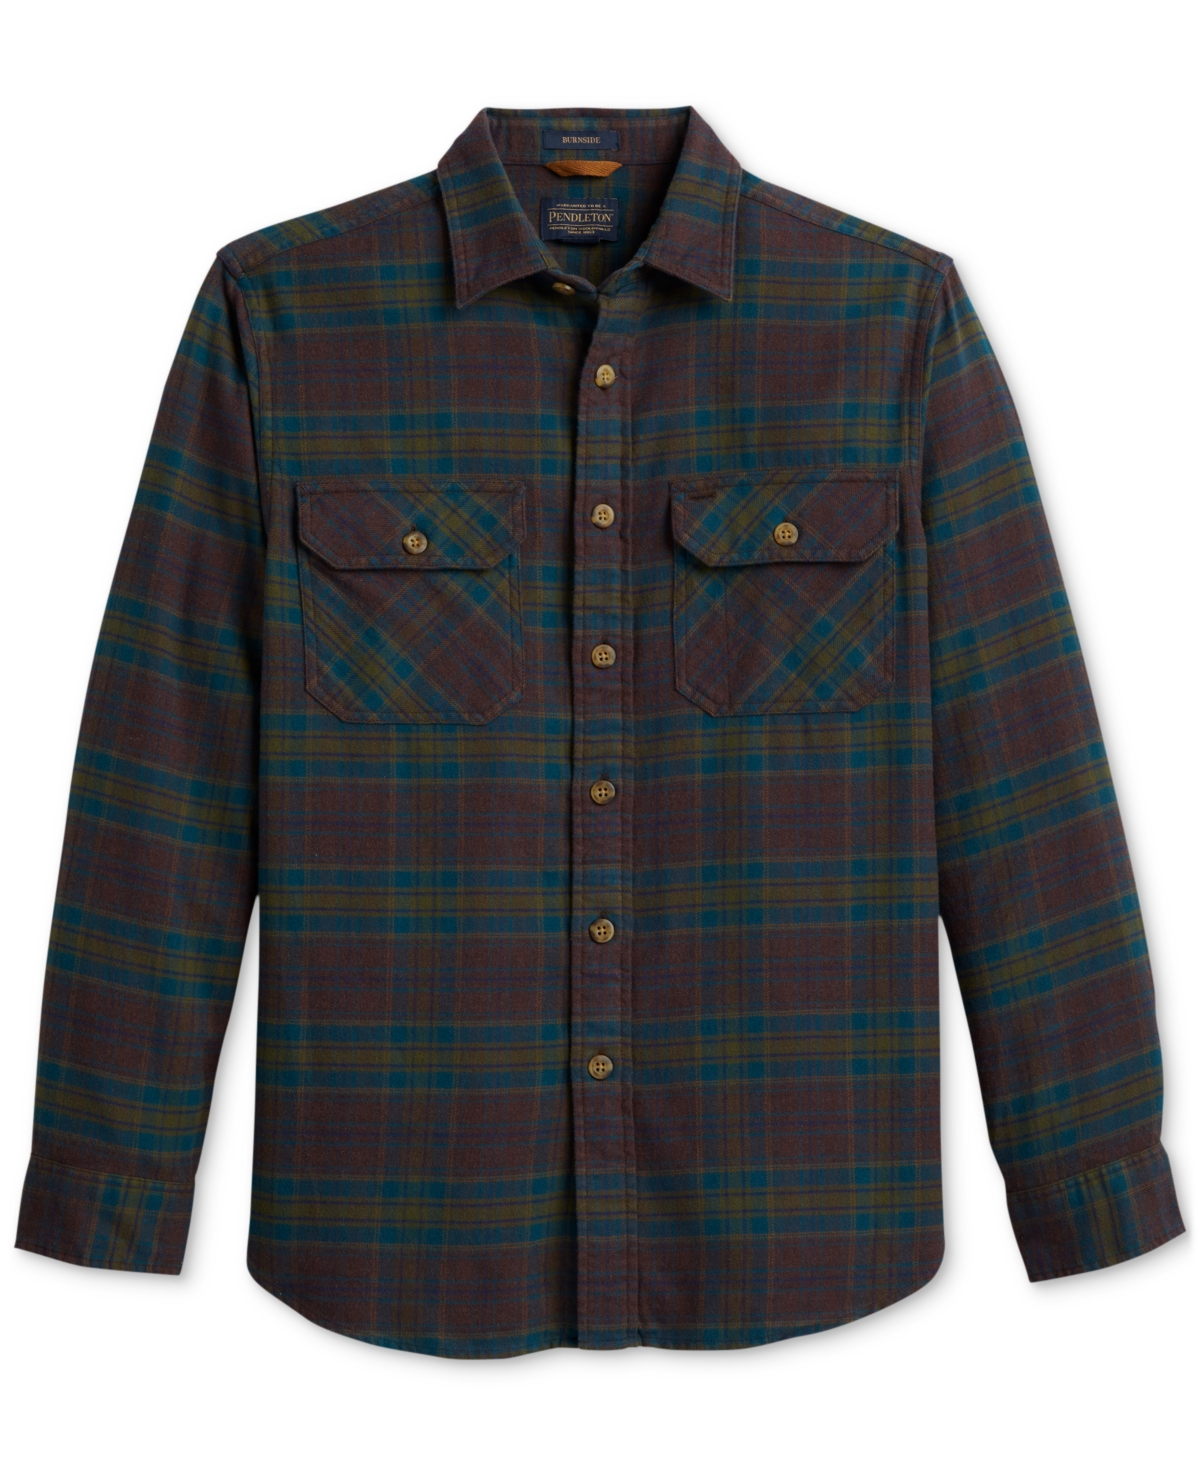 Men's Burnside Plaid Button-Down Flannel Shirt - Teal/olive/gold